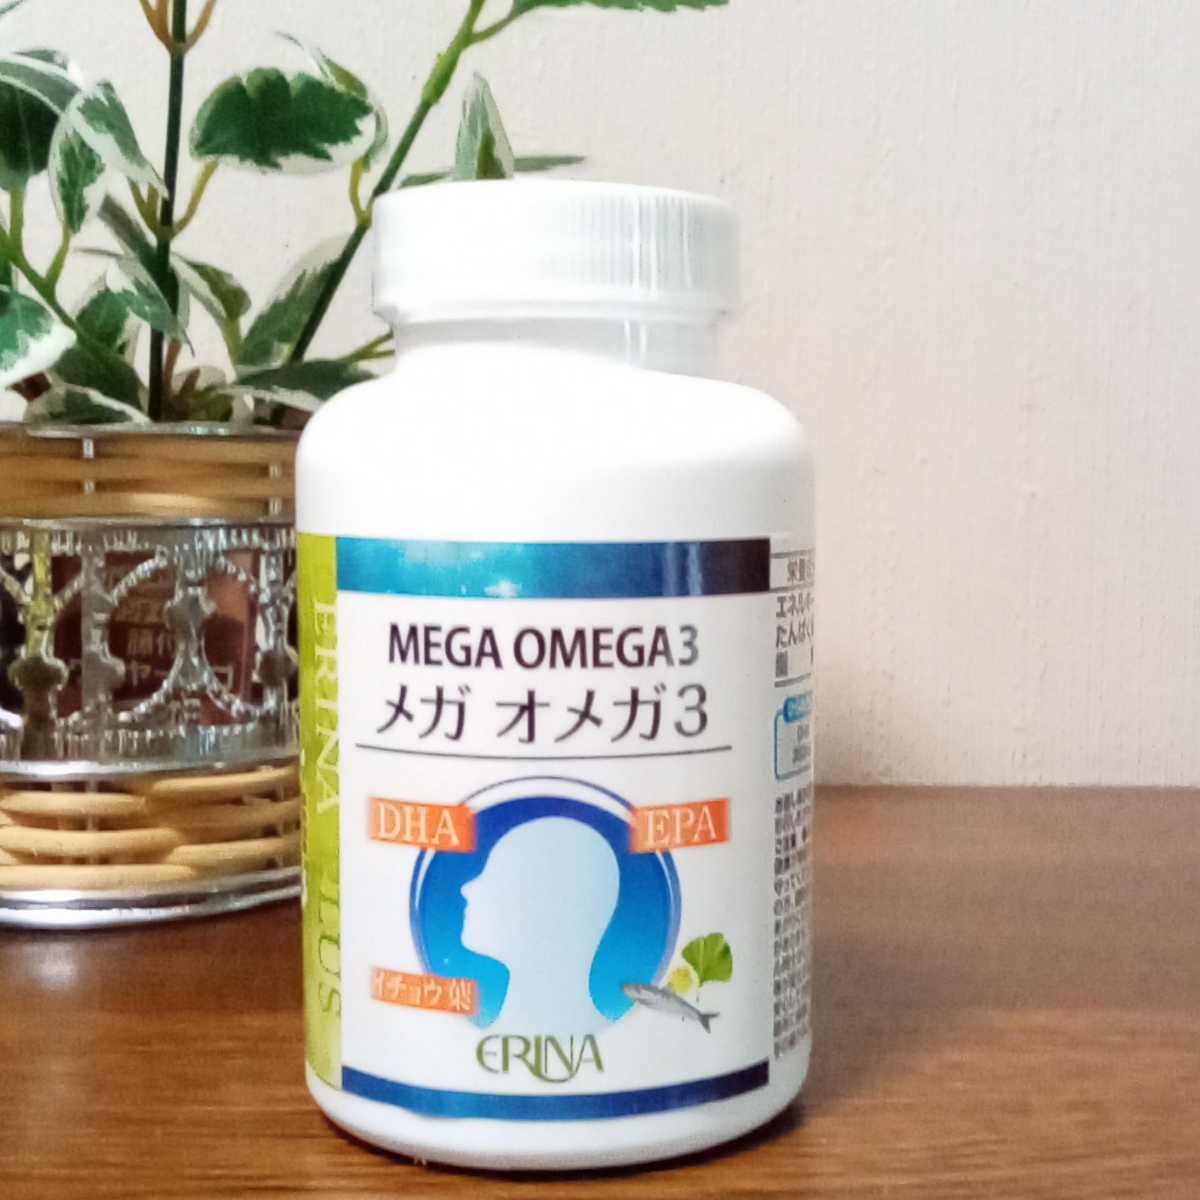  erina mega Omega 3 ginkgo biloba leaf extract 